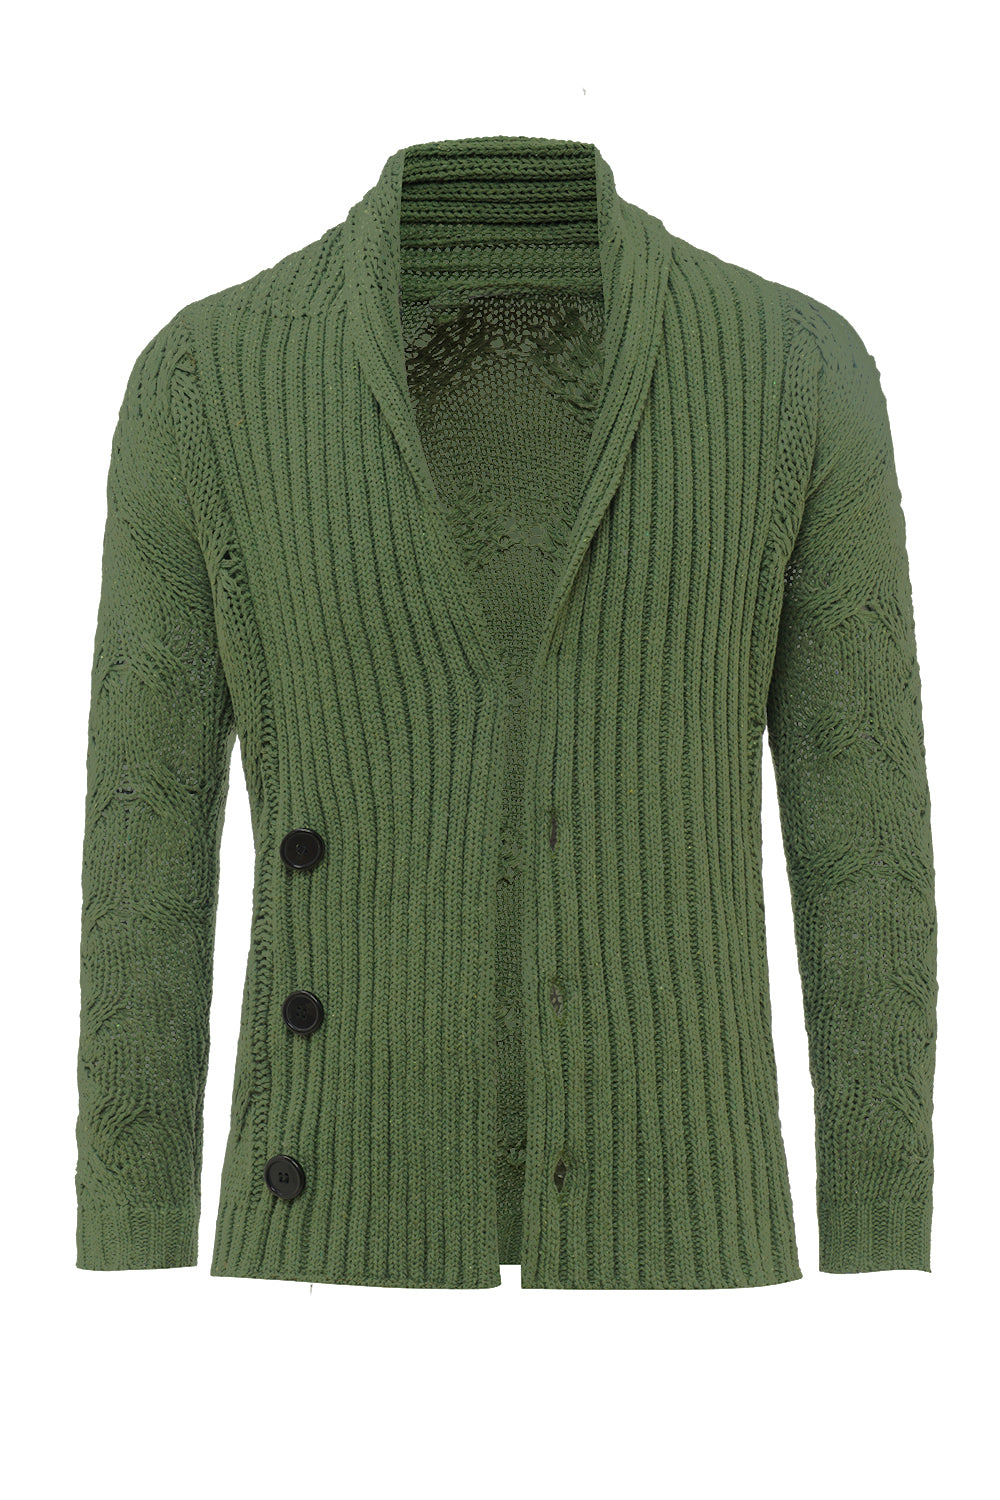 Green Shawl Collar Long Sleeves Men's Cardigan Sweater